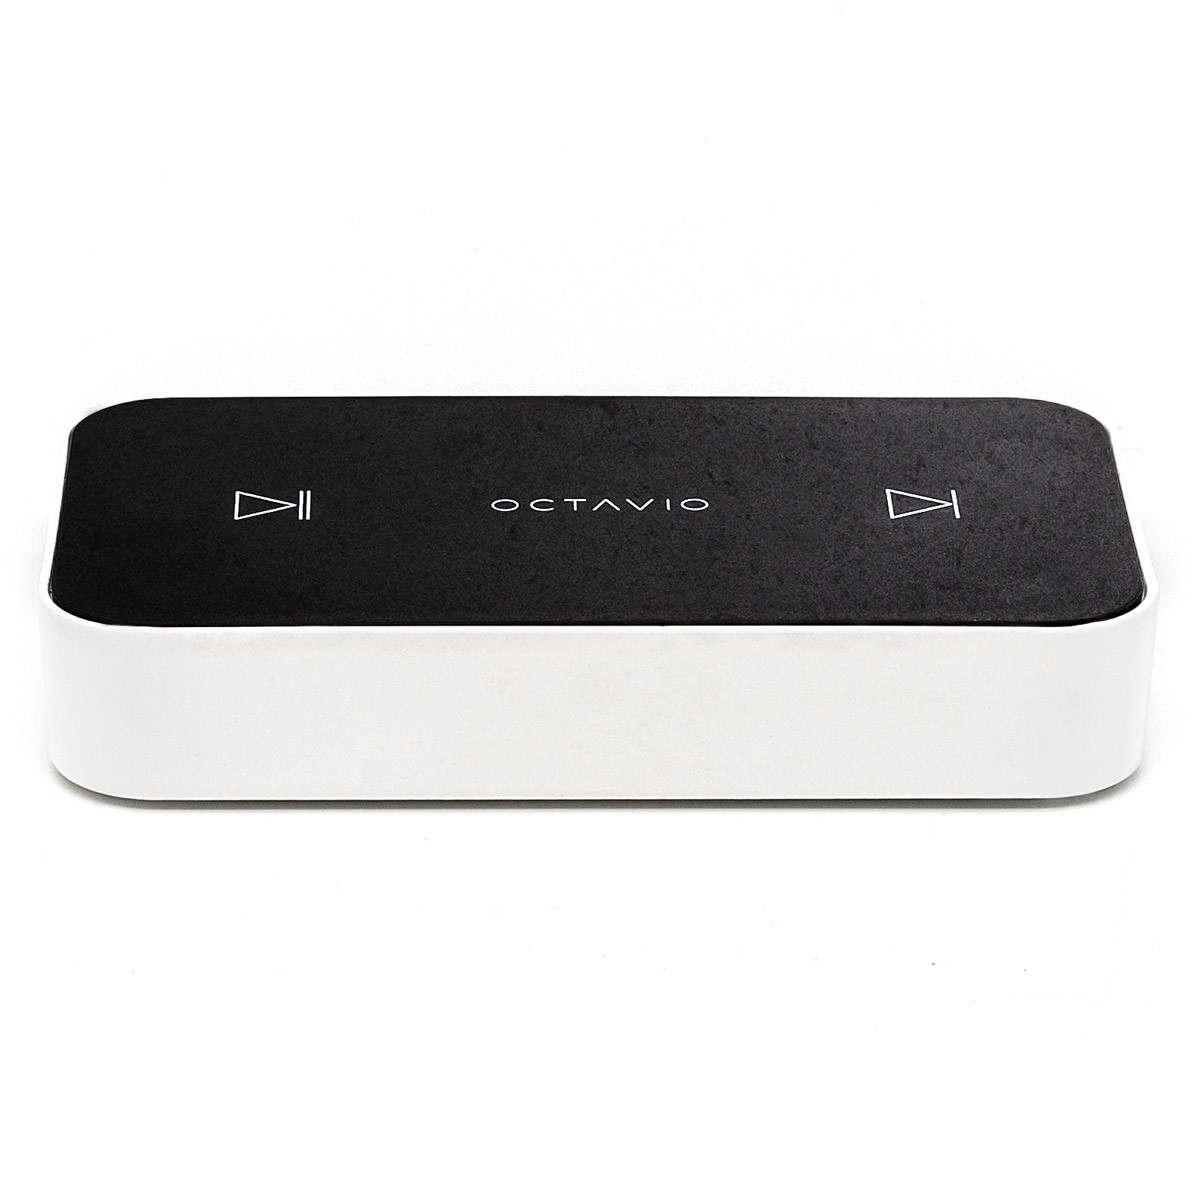 OCTAVIO STREAM Streamer Bit-Perfect WiFi AirPlay 2 Bluetooth 24bit 192kHz